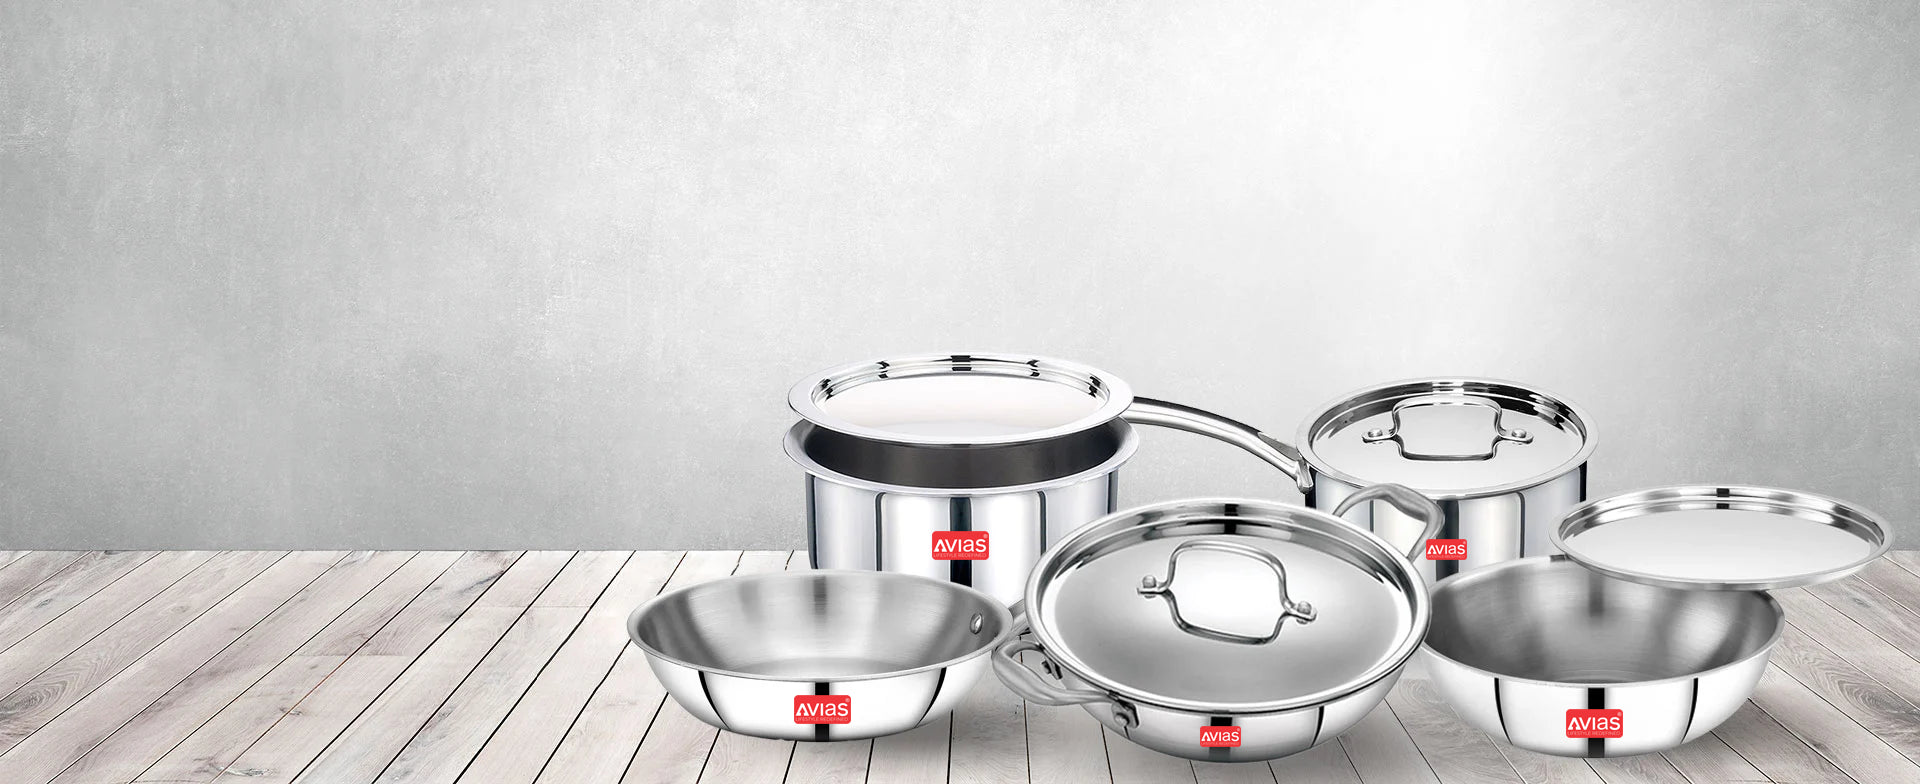 Avias stainless steel triply cookware range